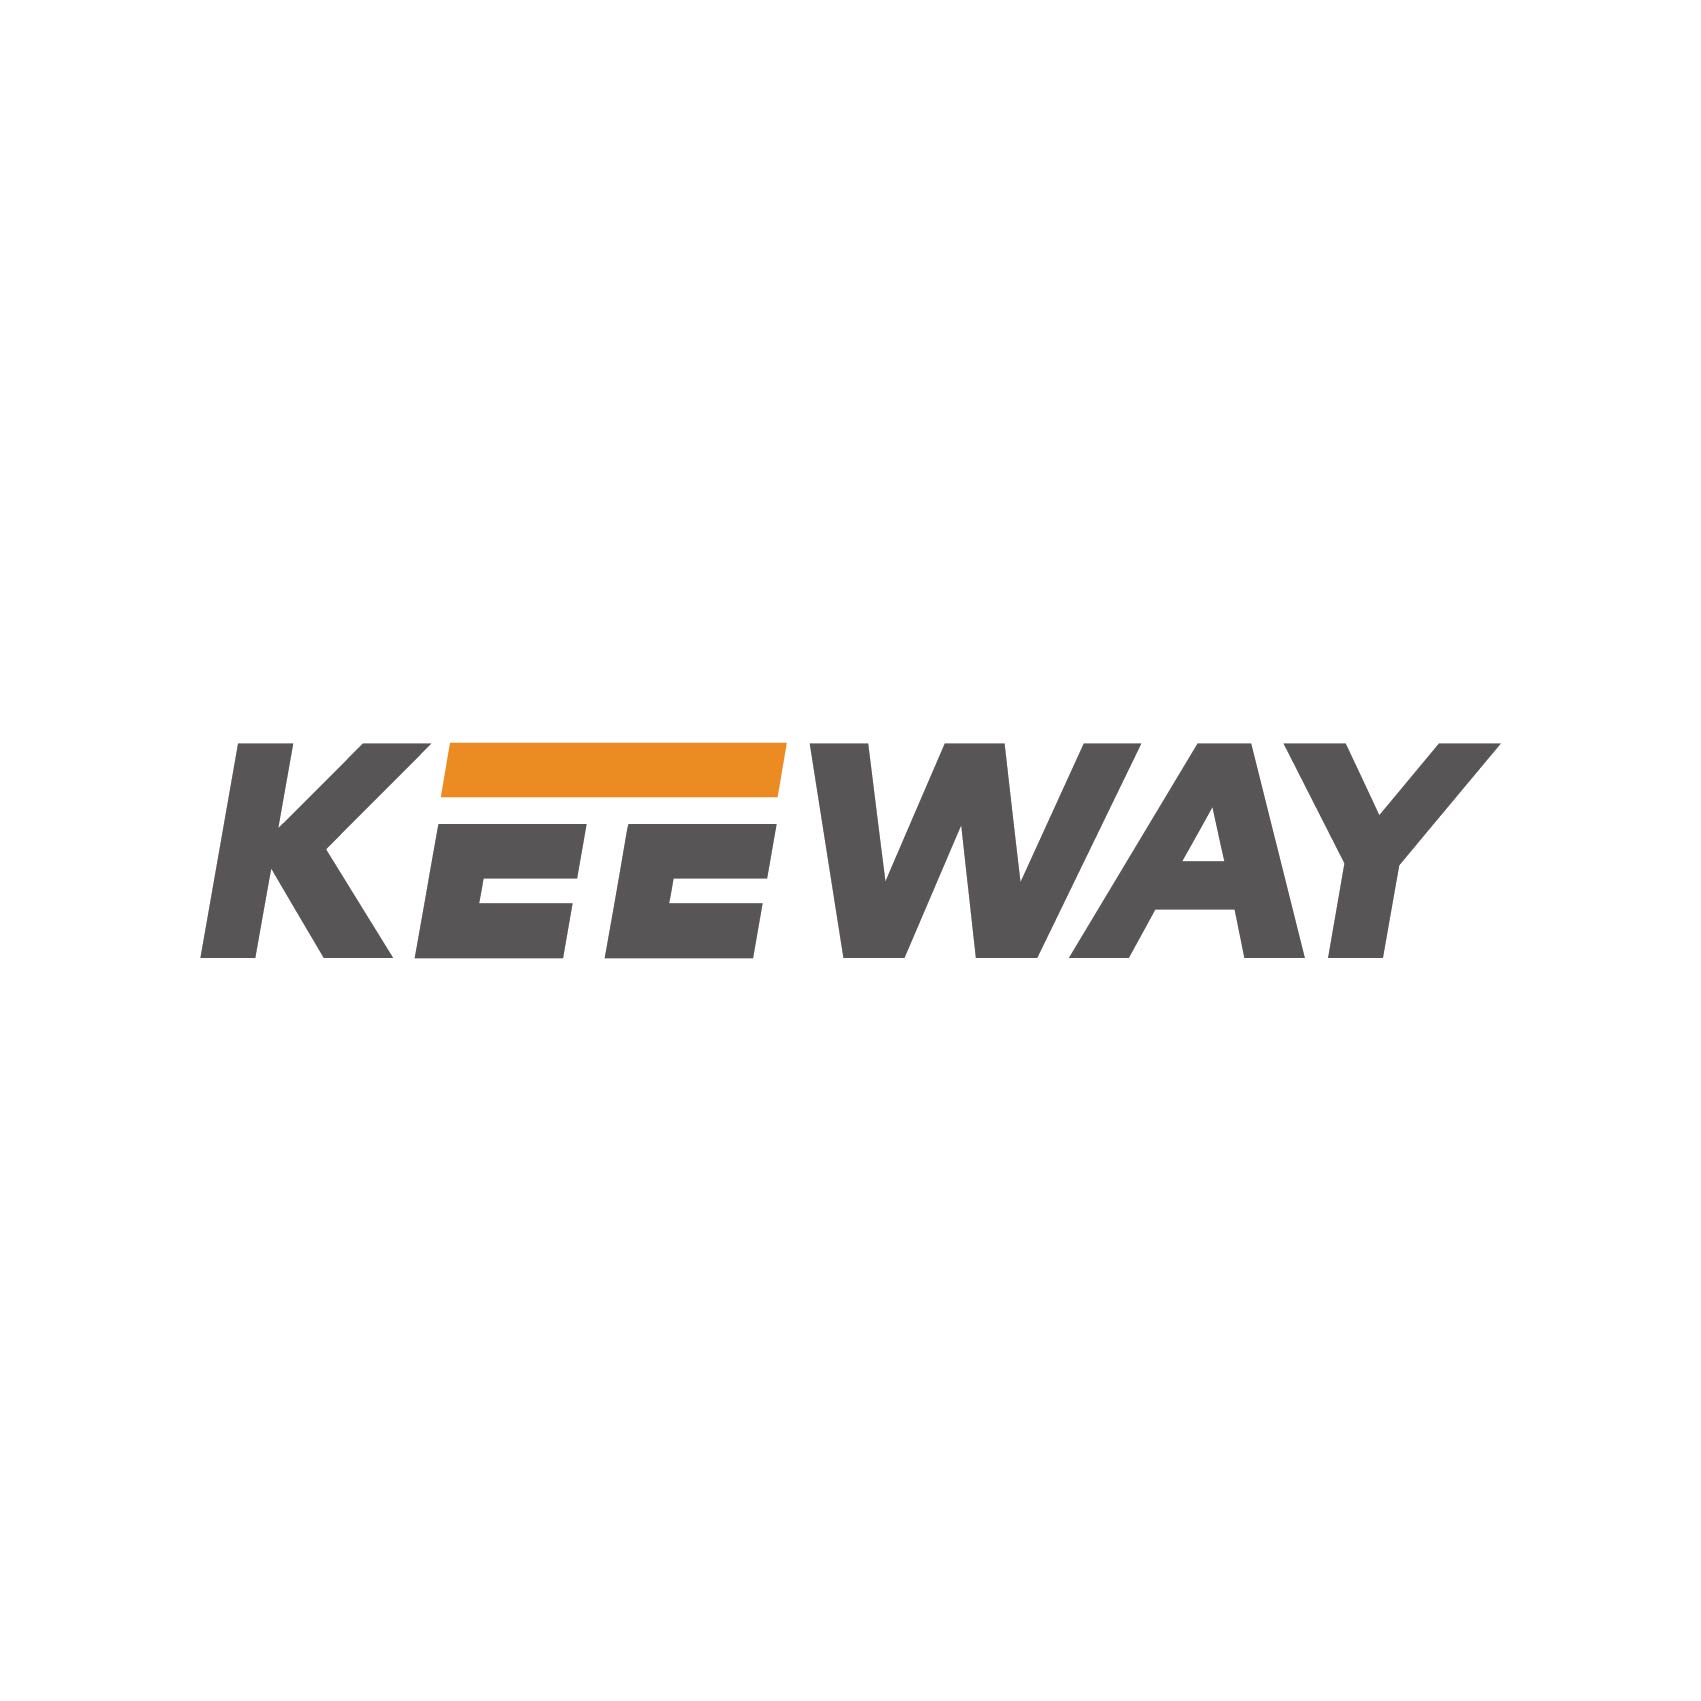 stickers-keeway-ecriture-ref5keeway-autocollant-keeway-sticker-pour-moto-sport